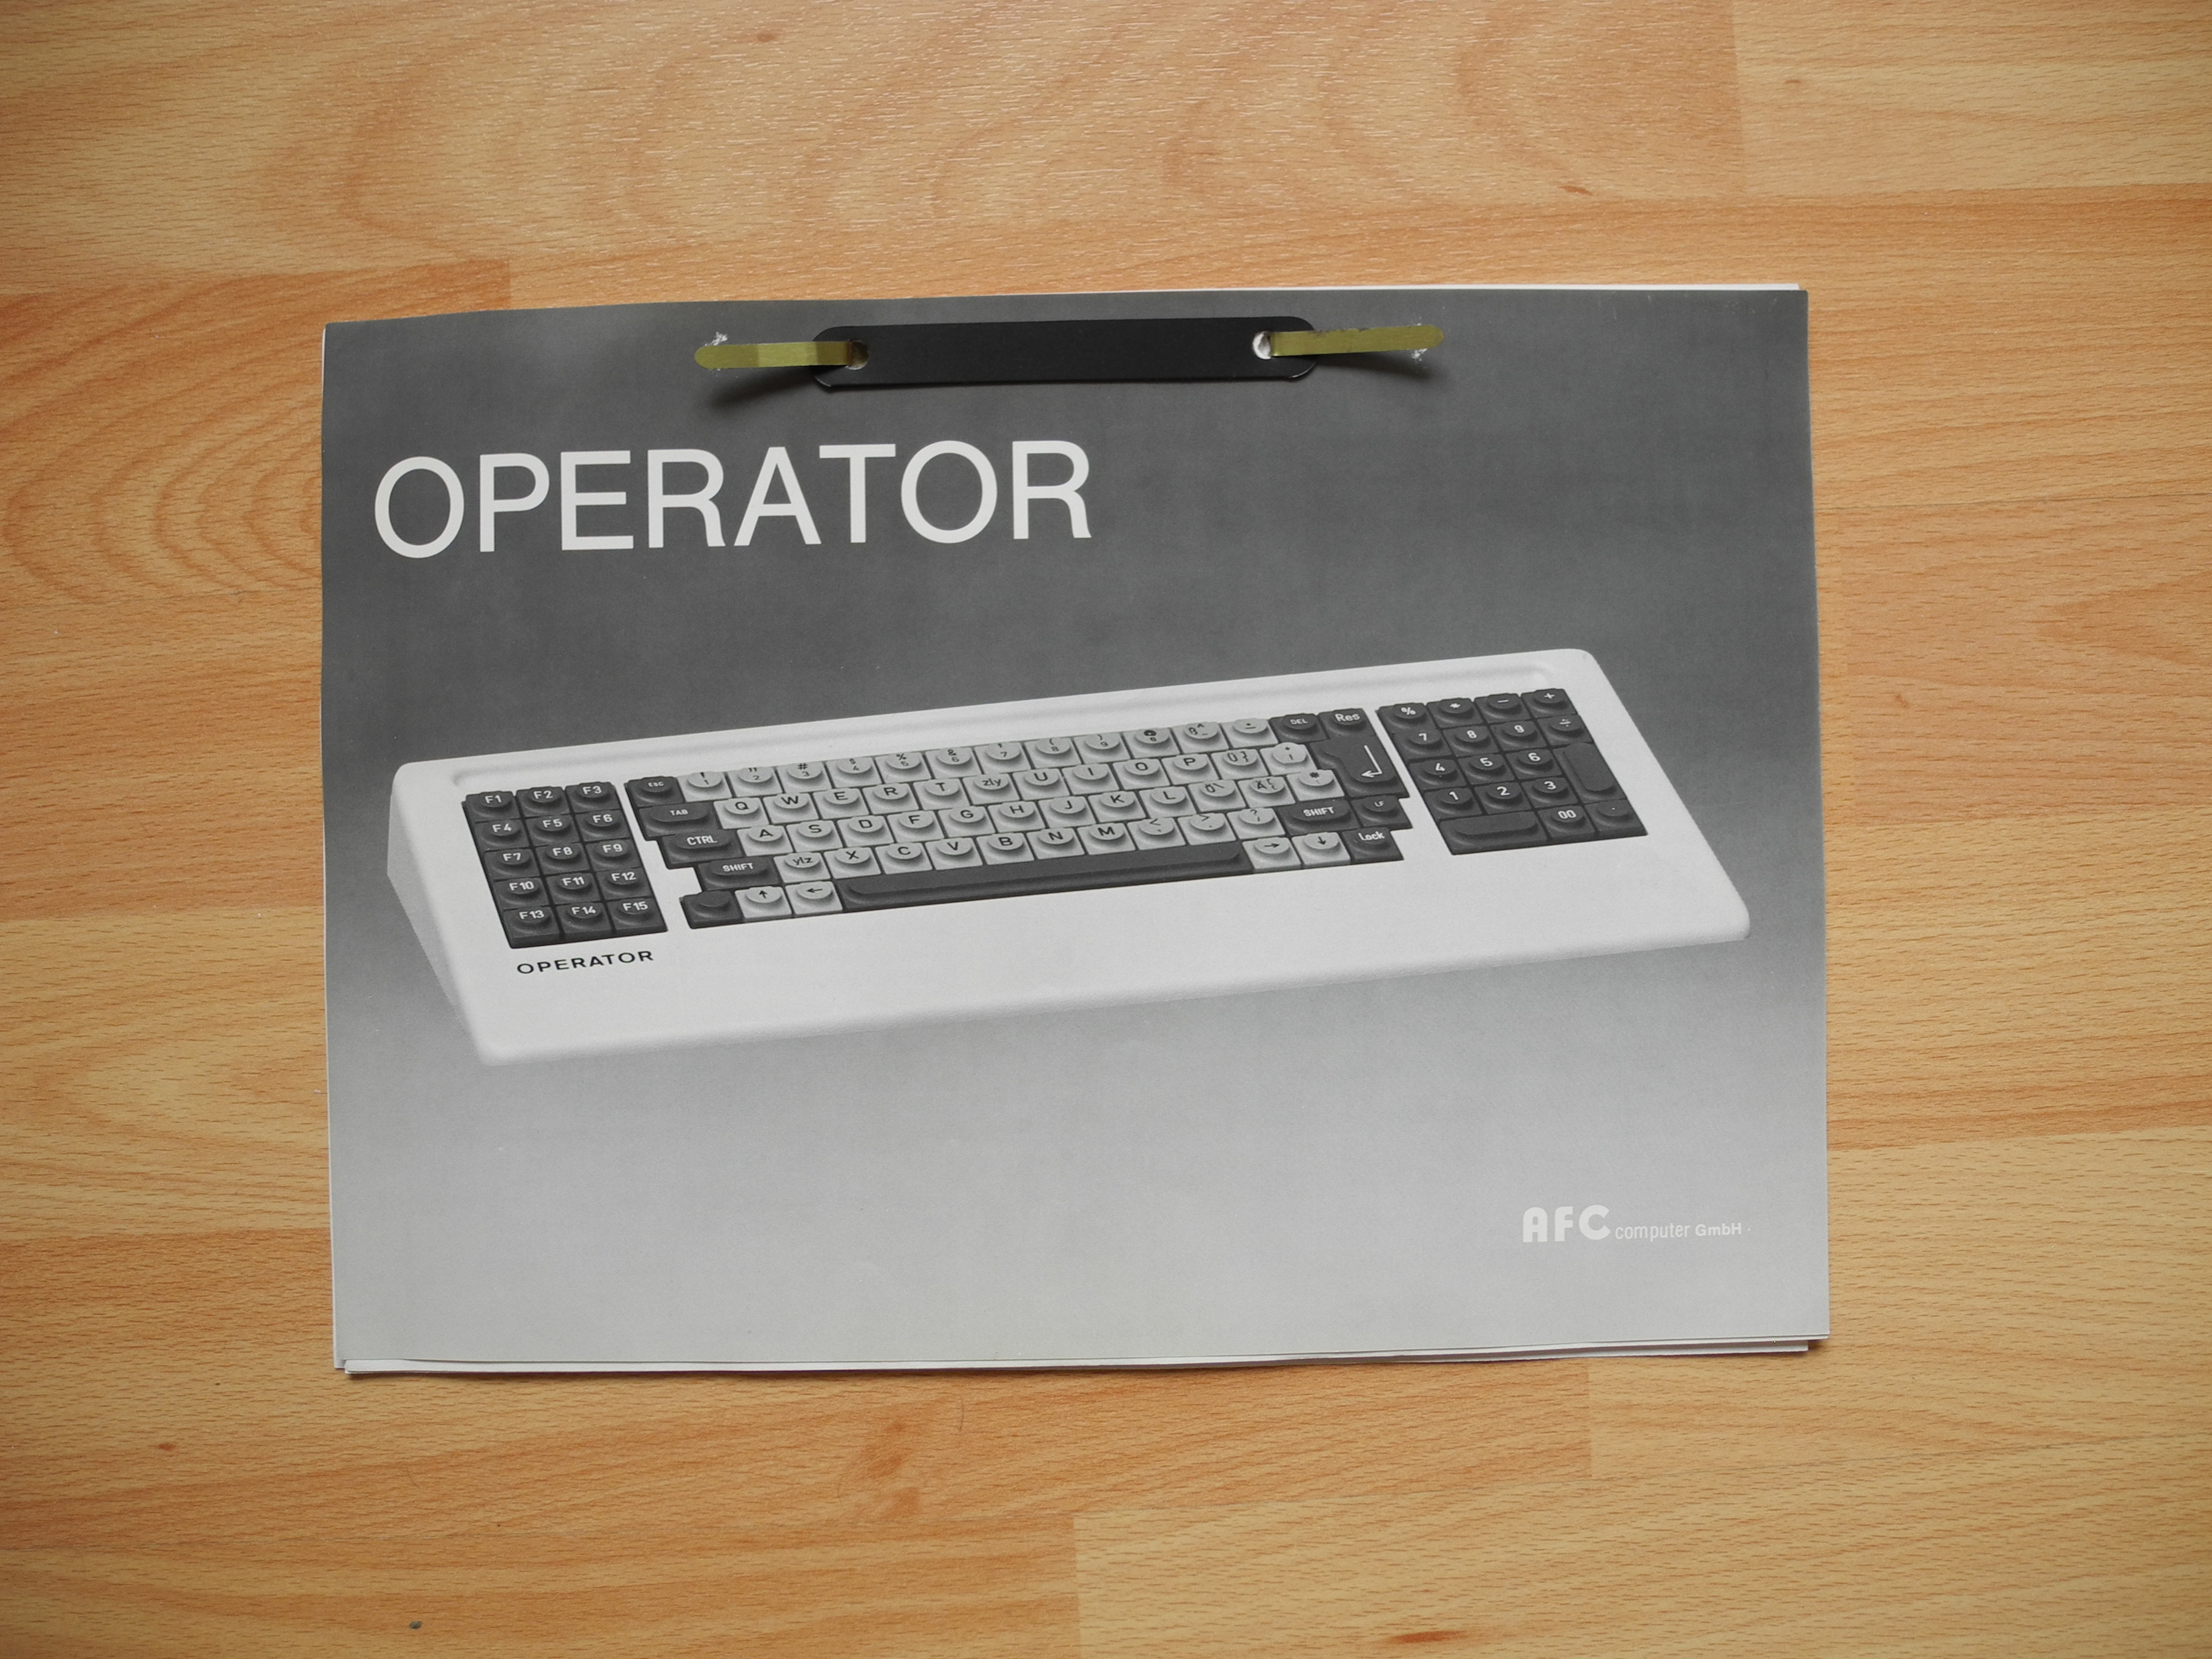 APC Operator (2).JPG